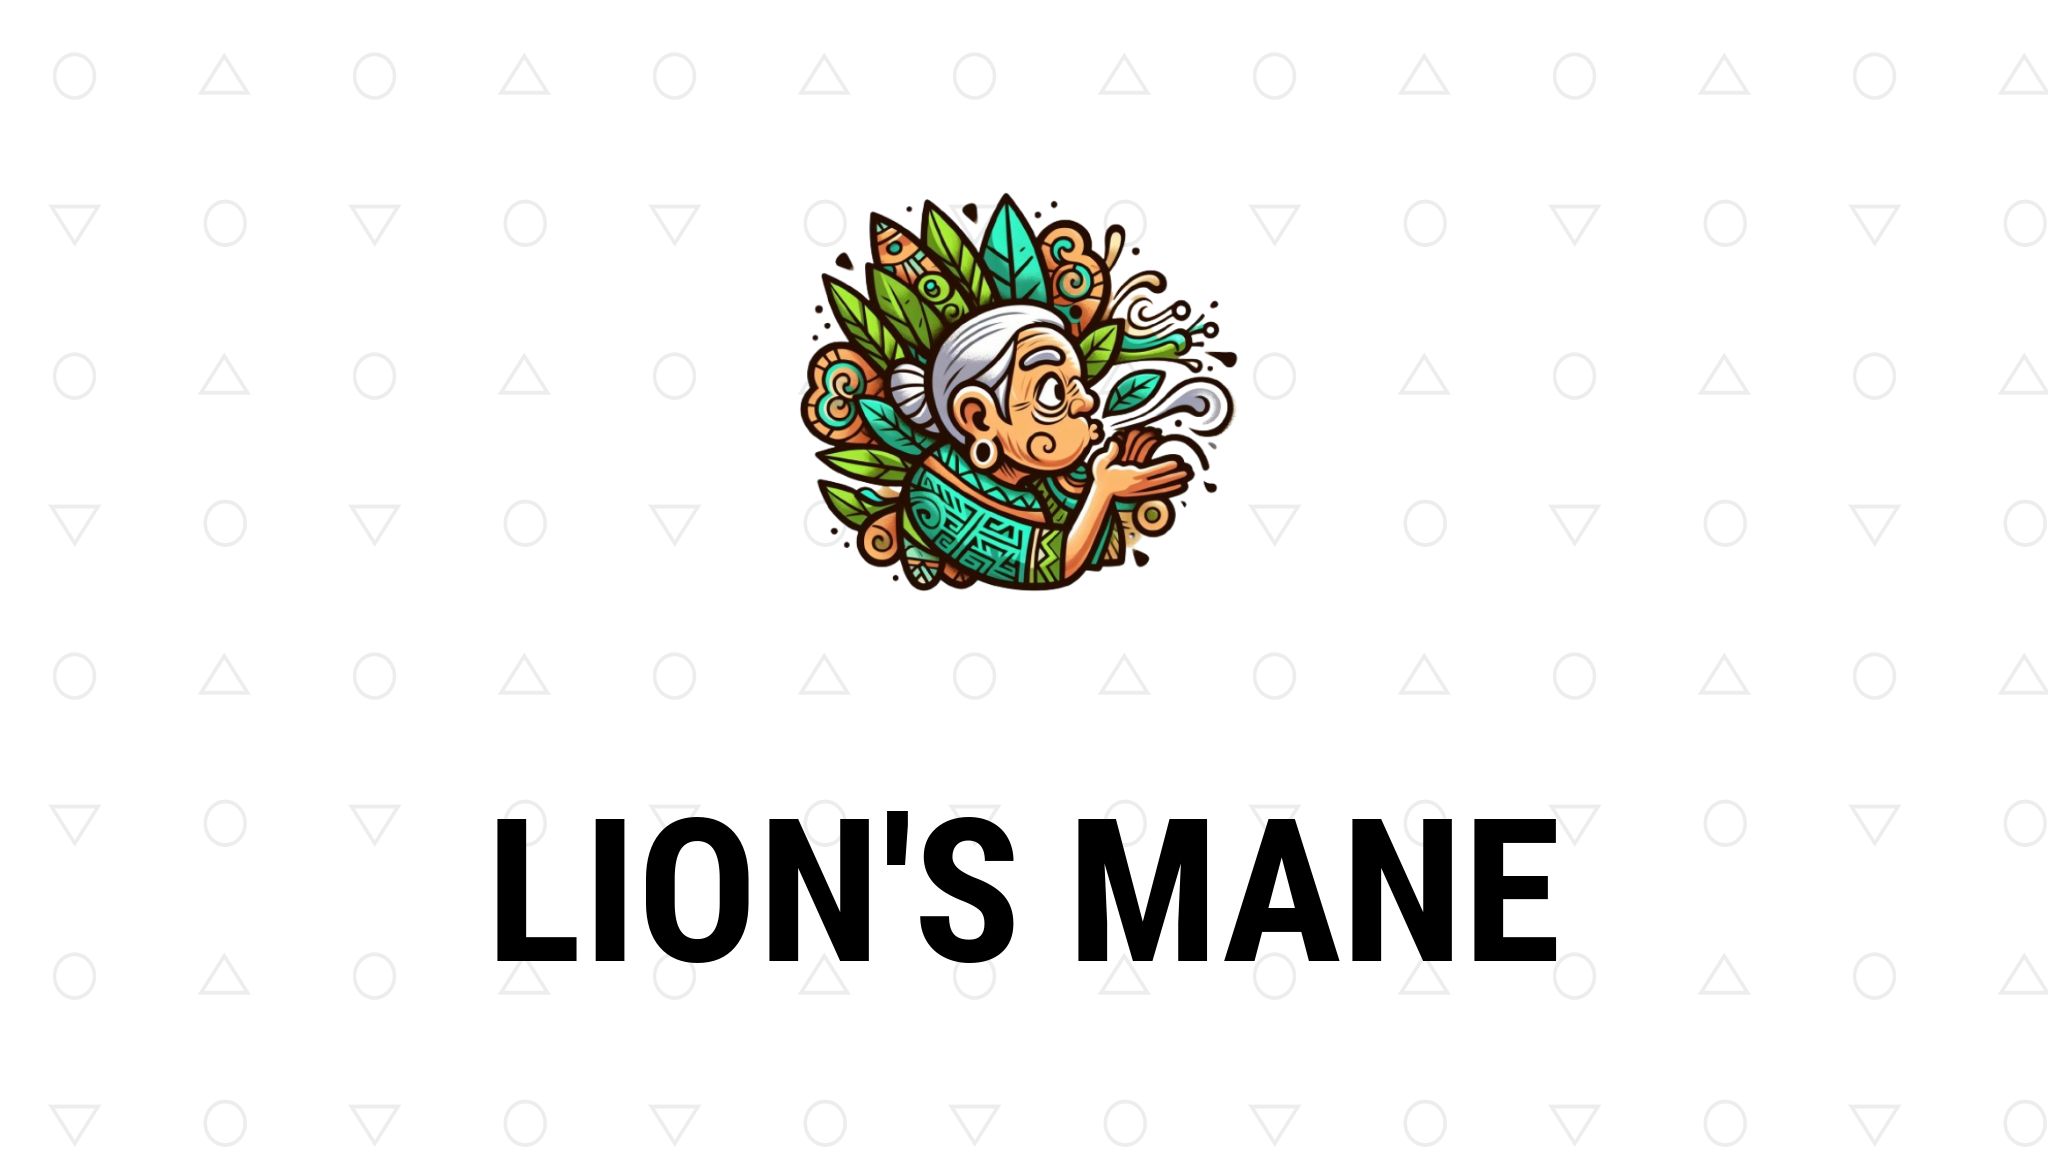 Lions Mane